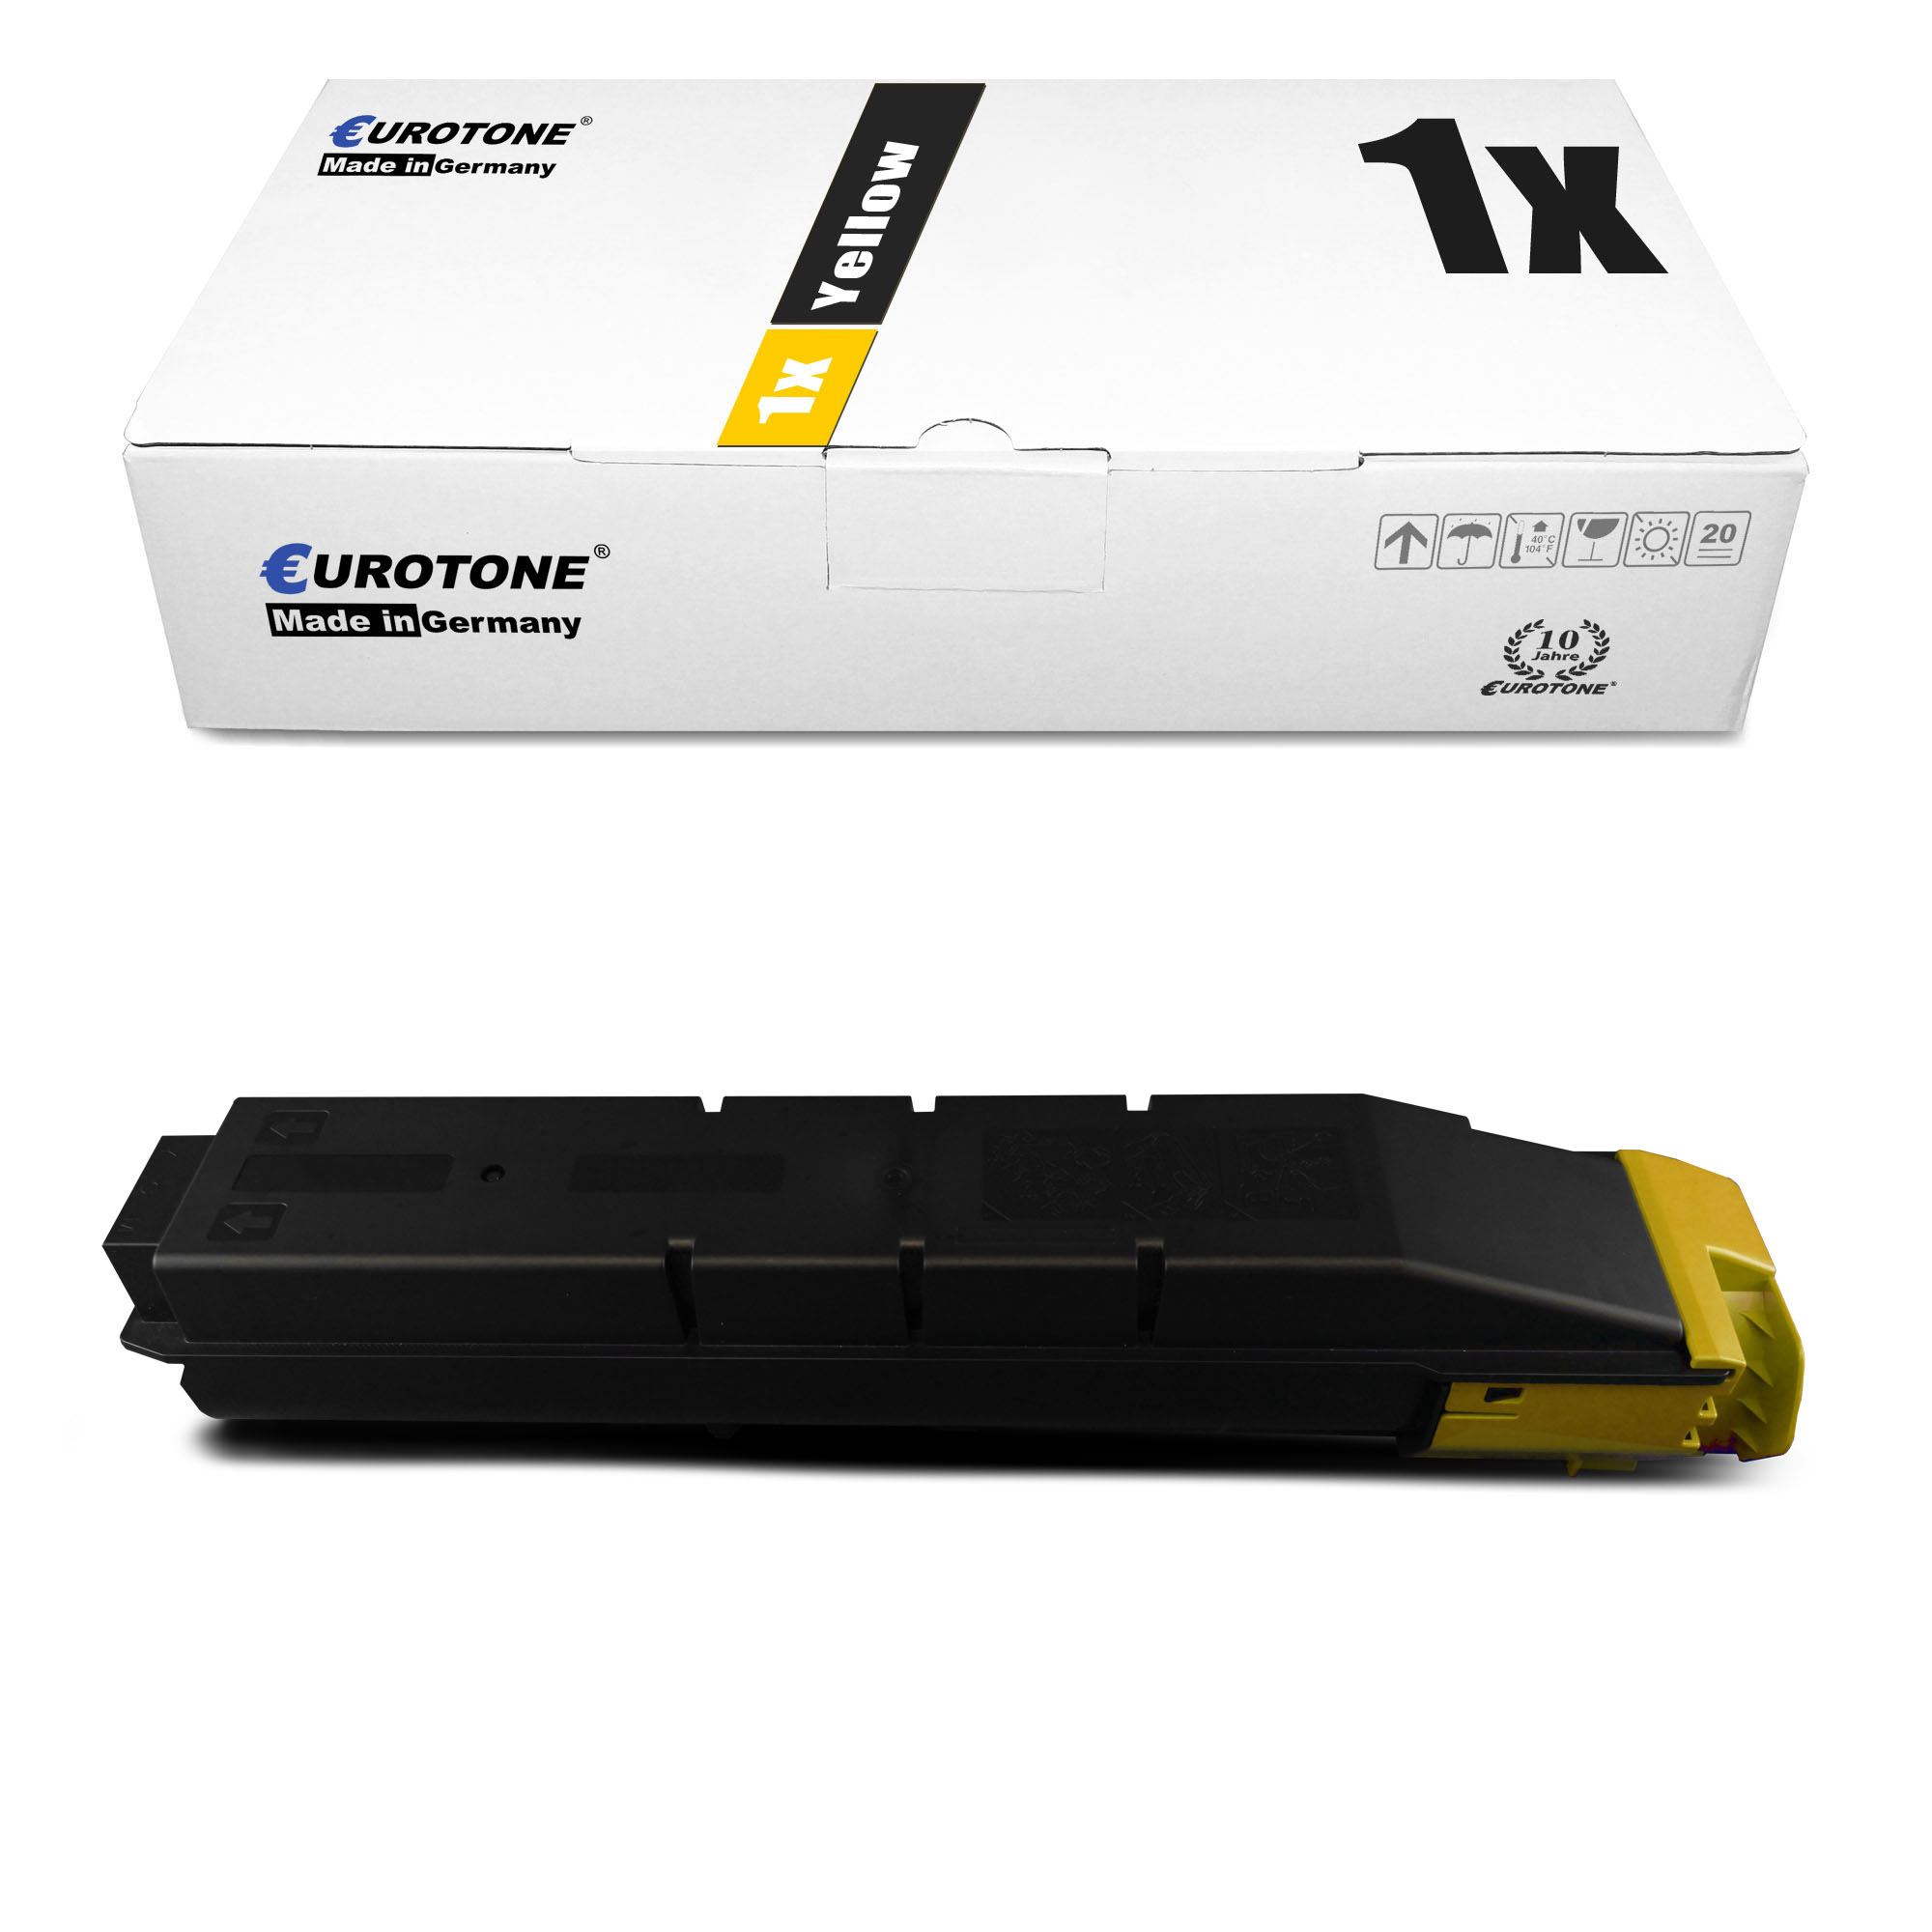 653010016) (Utax Yellow ET3169364 Cartridge EUROTONE Toner